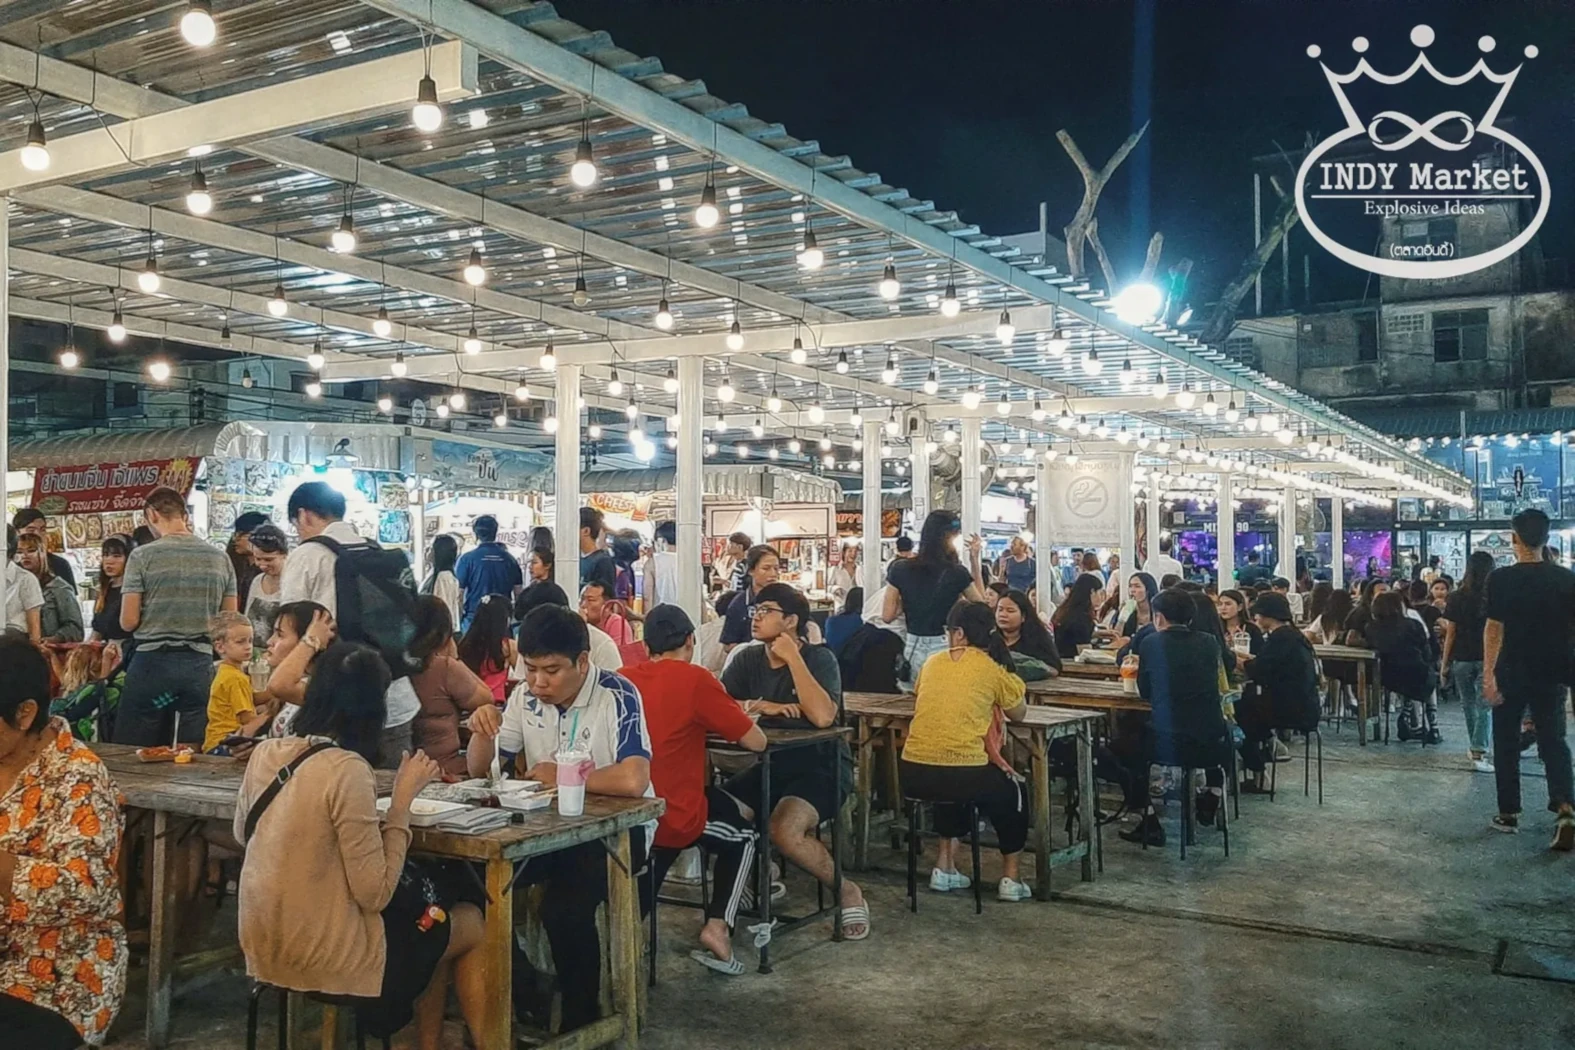 Photo of people eating at Indy Market in Bangkok.